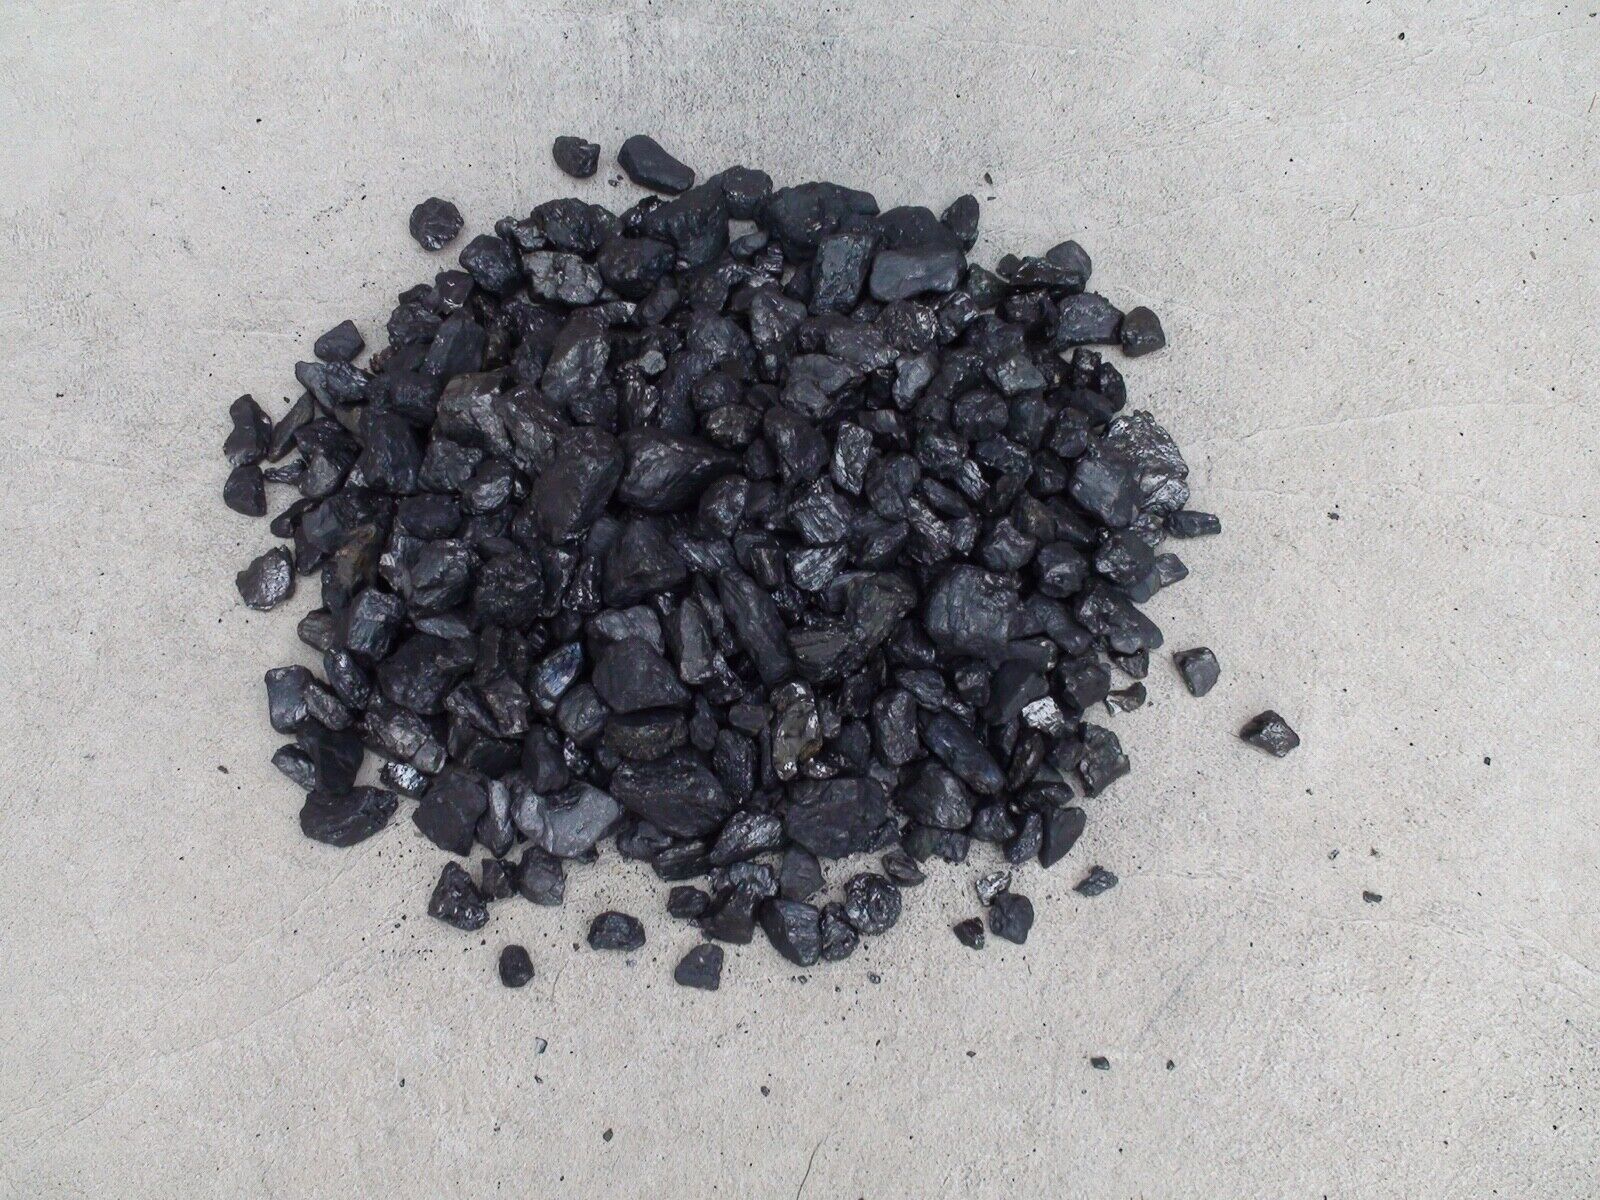 Anthracite Nut Coal 15 lbs Screened Blacksmith Knifemaking Teacher Aid Christmas